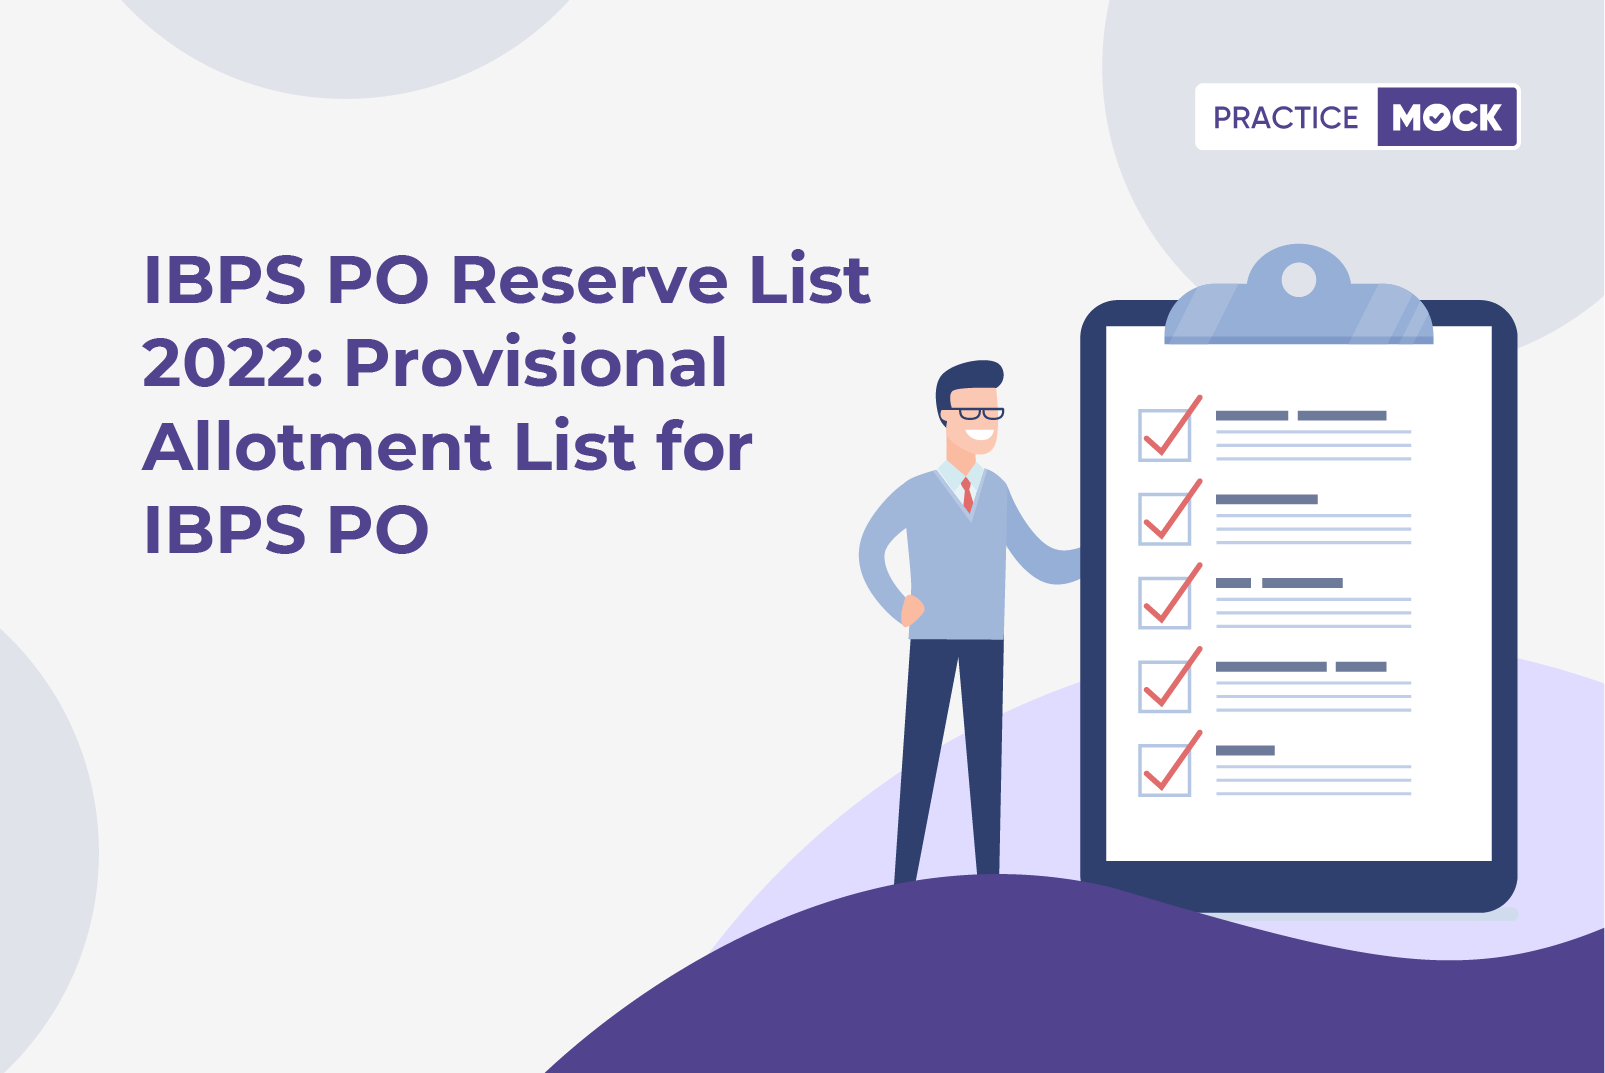 IBPS PO Reserve List 2022: Provisional Allotment List for IBPS PO